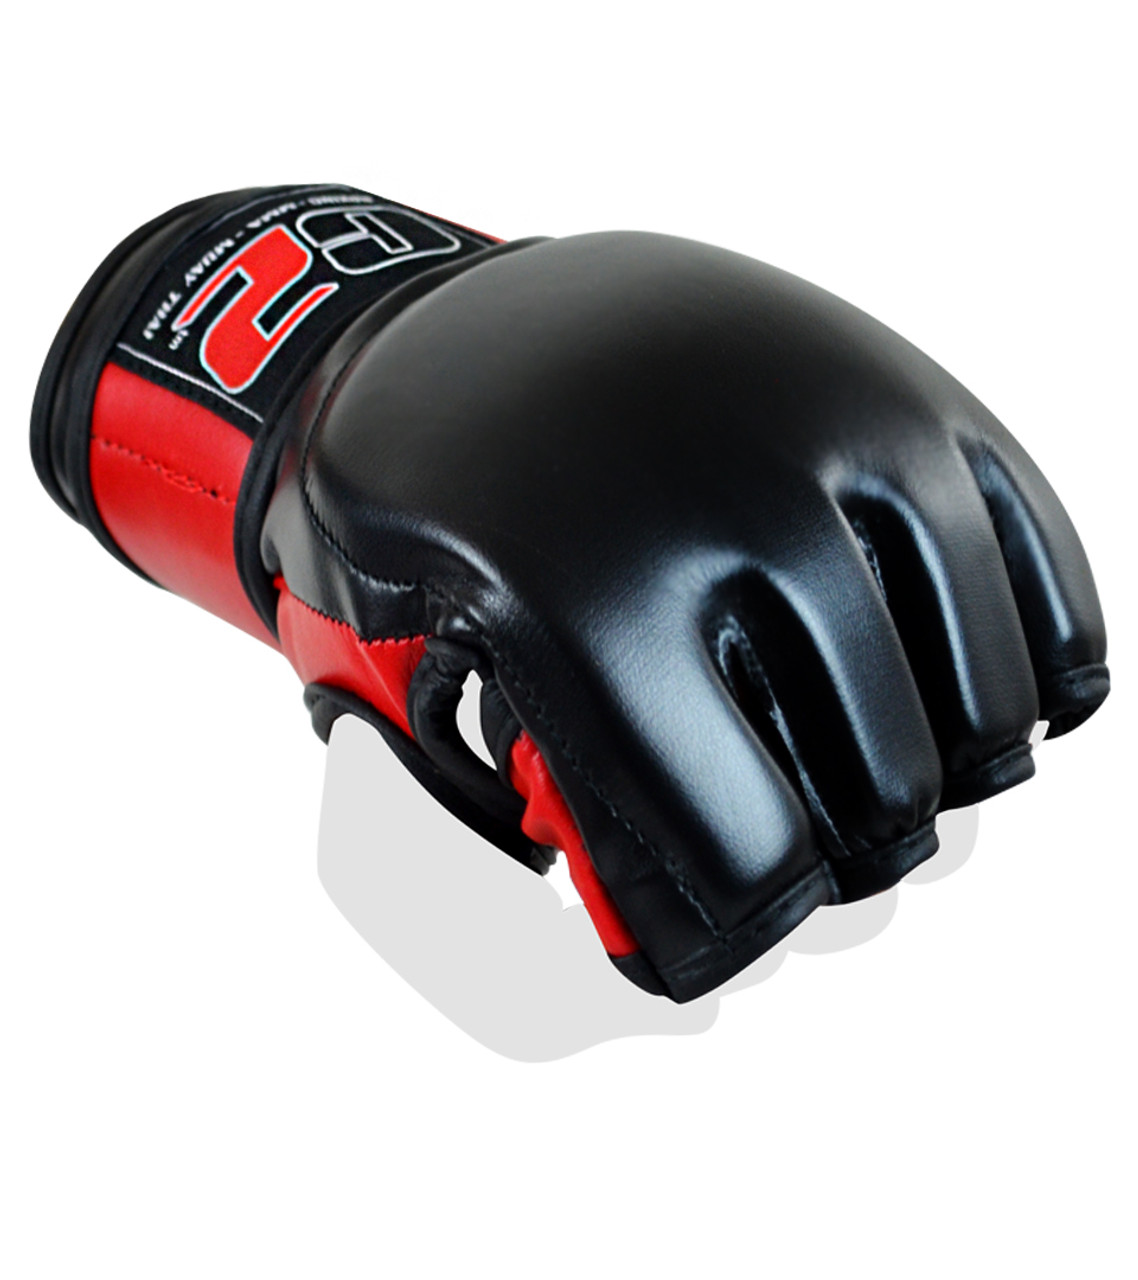 Combat Corner Super Pro MMA Fight Gloves